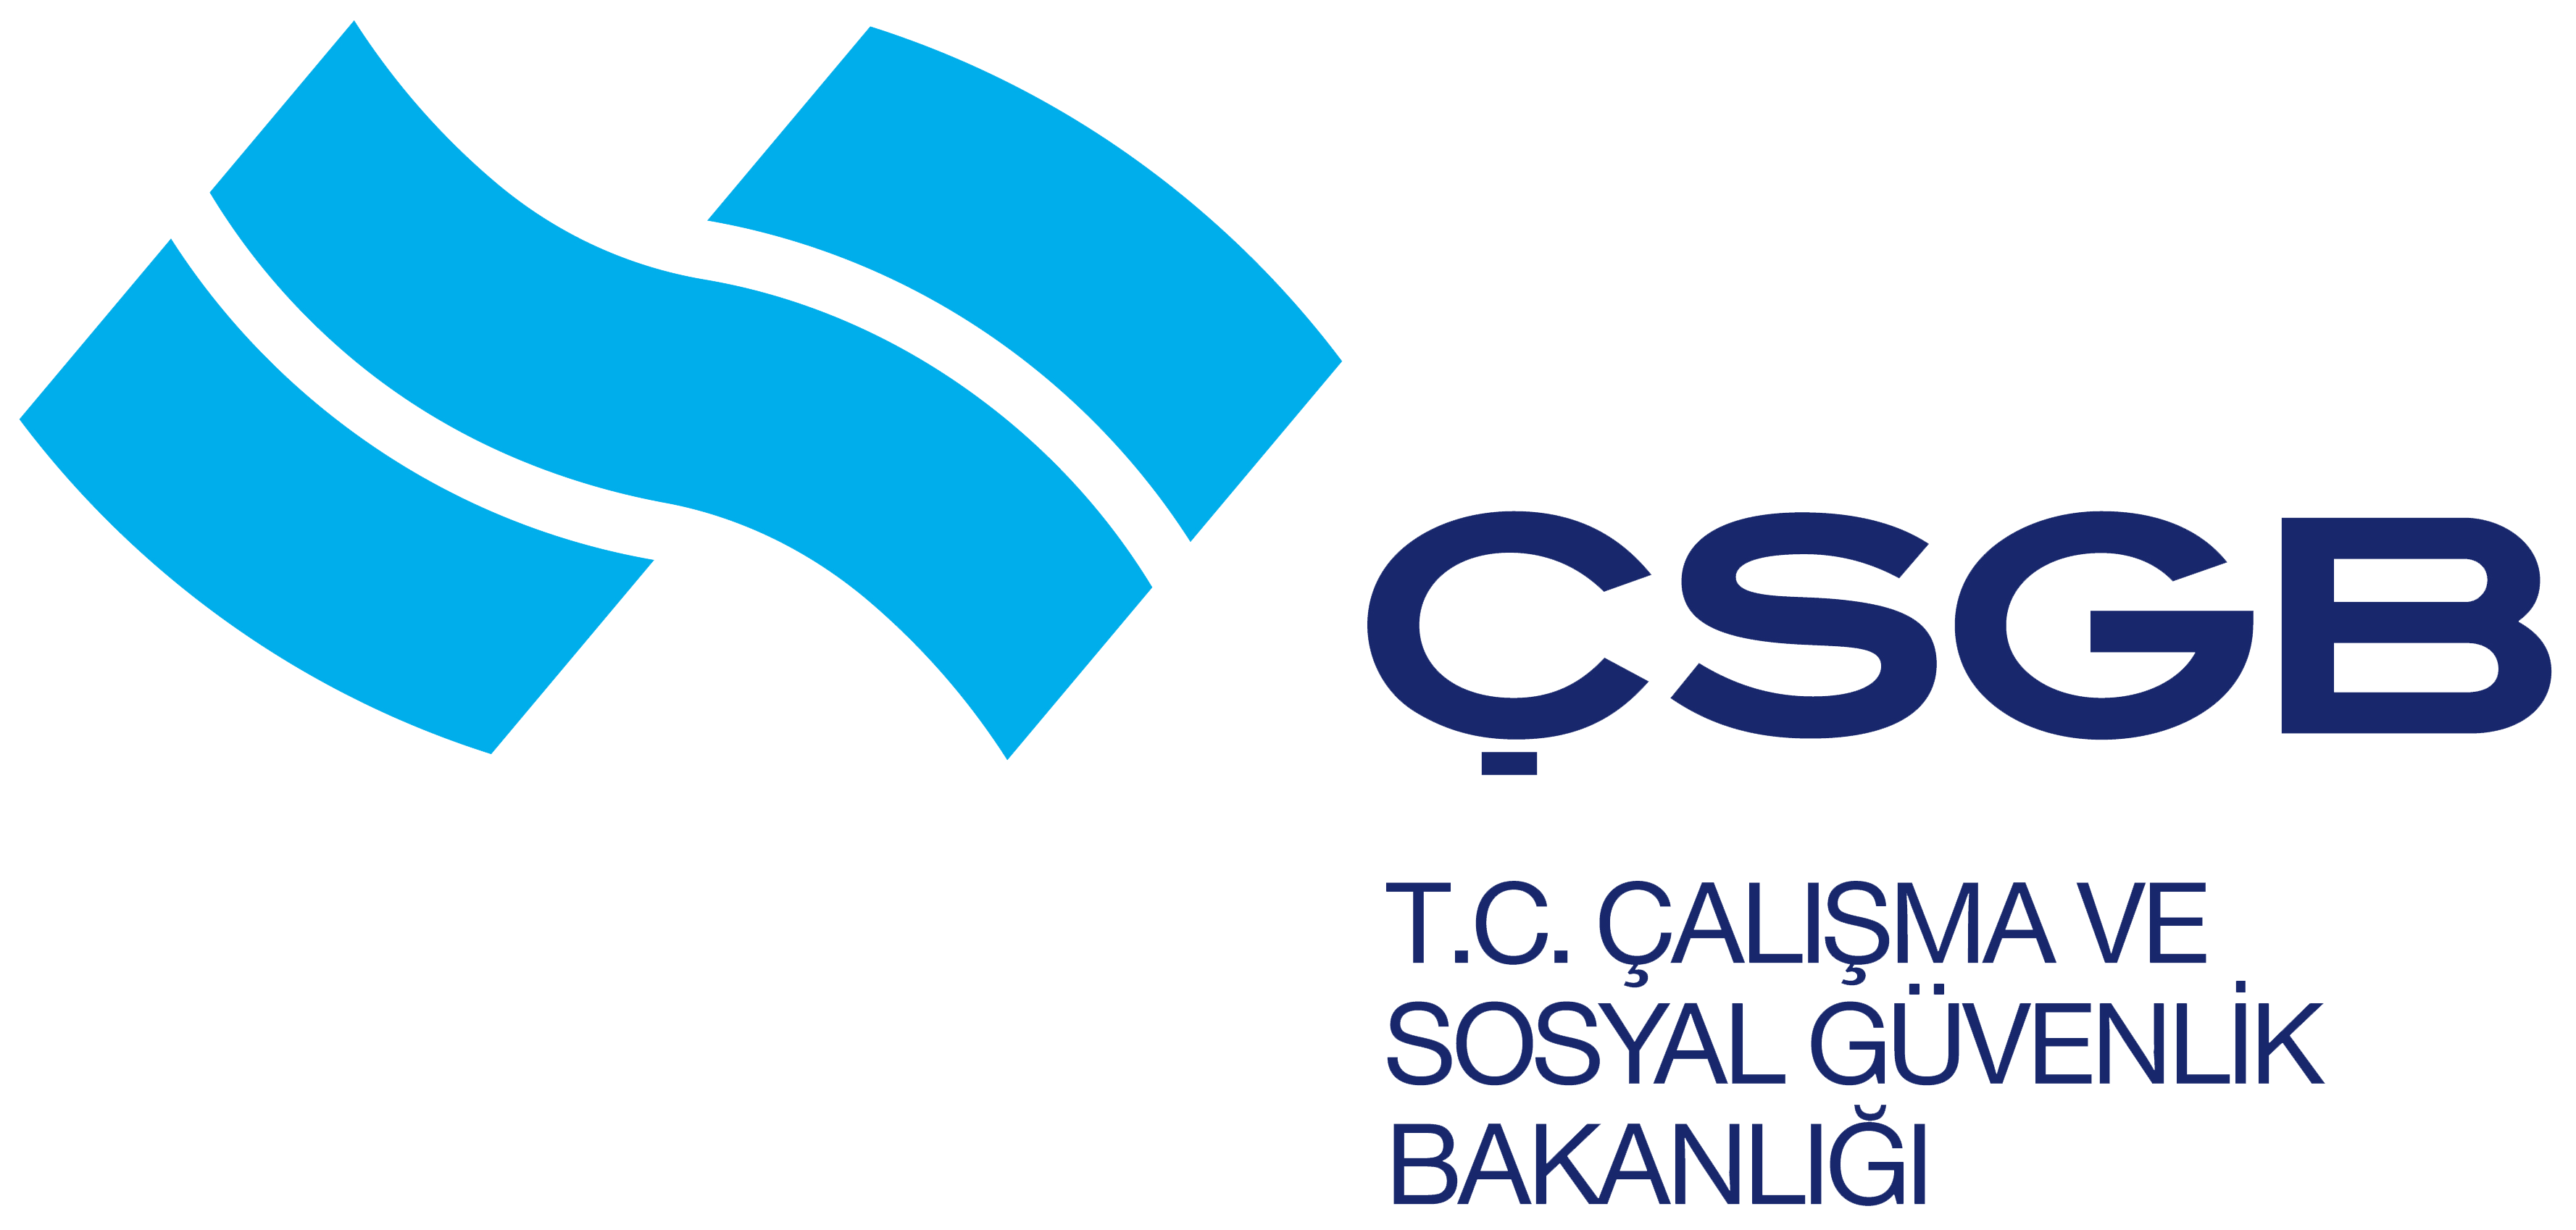 ÇSGB – T.C. Çalışma ve Sosyal Güvenlik Bakanlığı Logosu [csgb.gov.tr] png